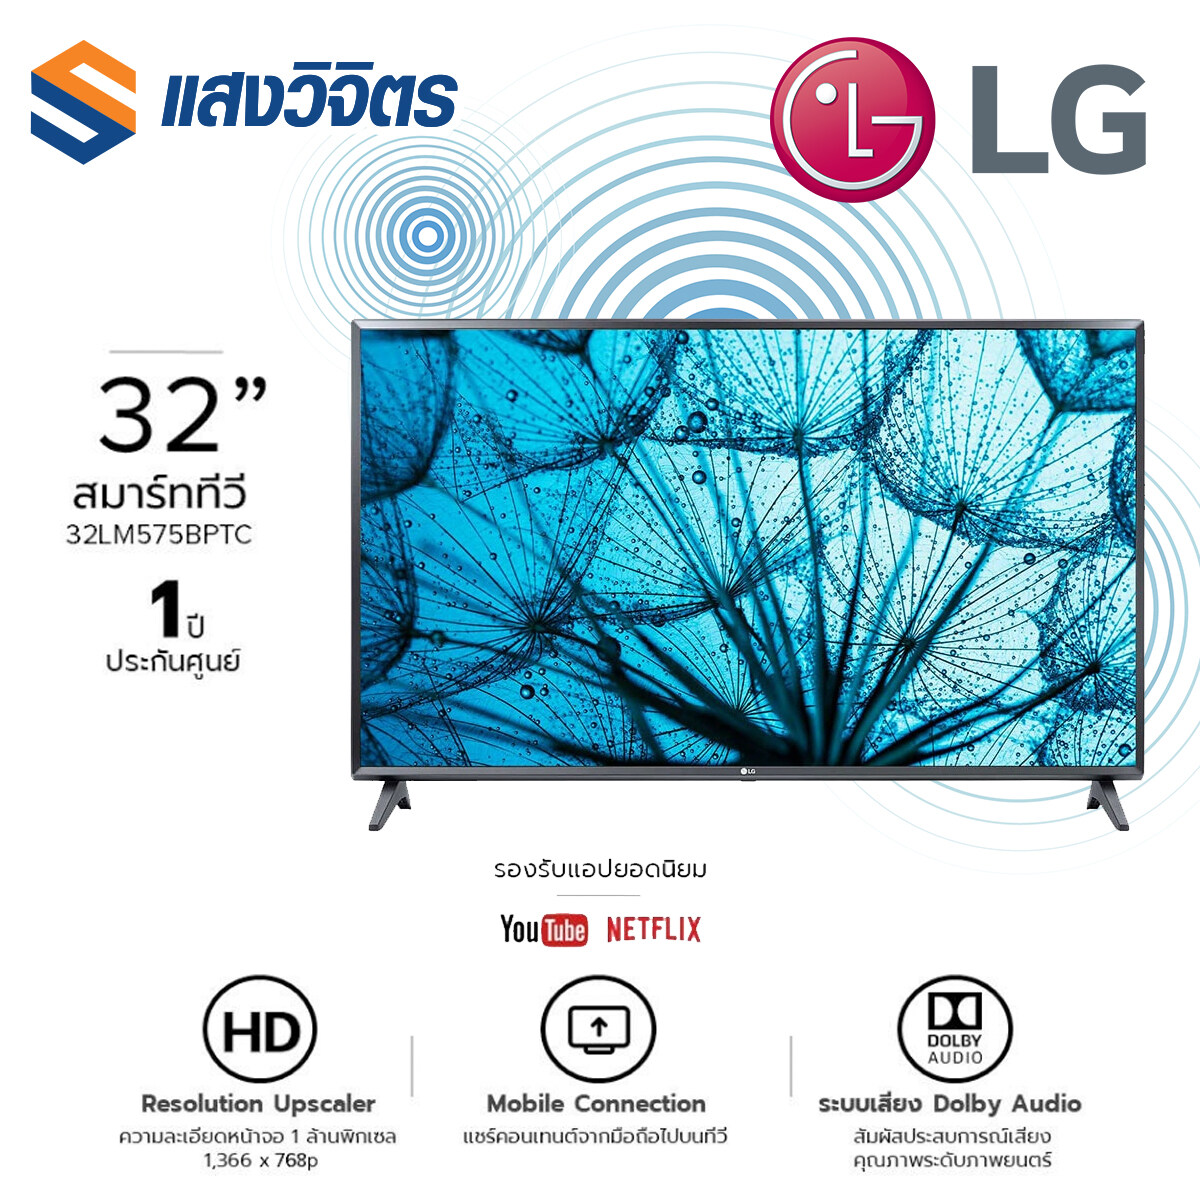 LG แอลจี สมาร์ททีวี HD LED รุ่น 32LM575 ขนาด 32 นิ้ว Web Browser Netflix Dolby Audio รับประกันศูนย์ 1 ปี